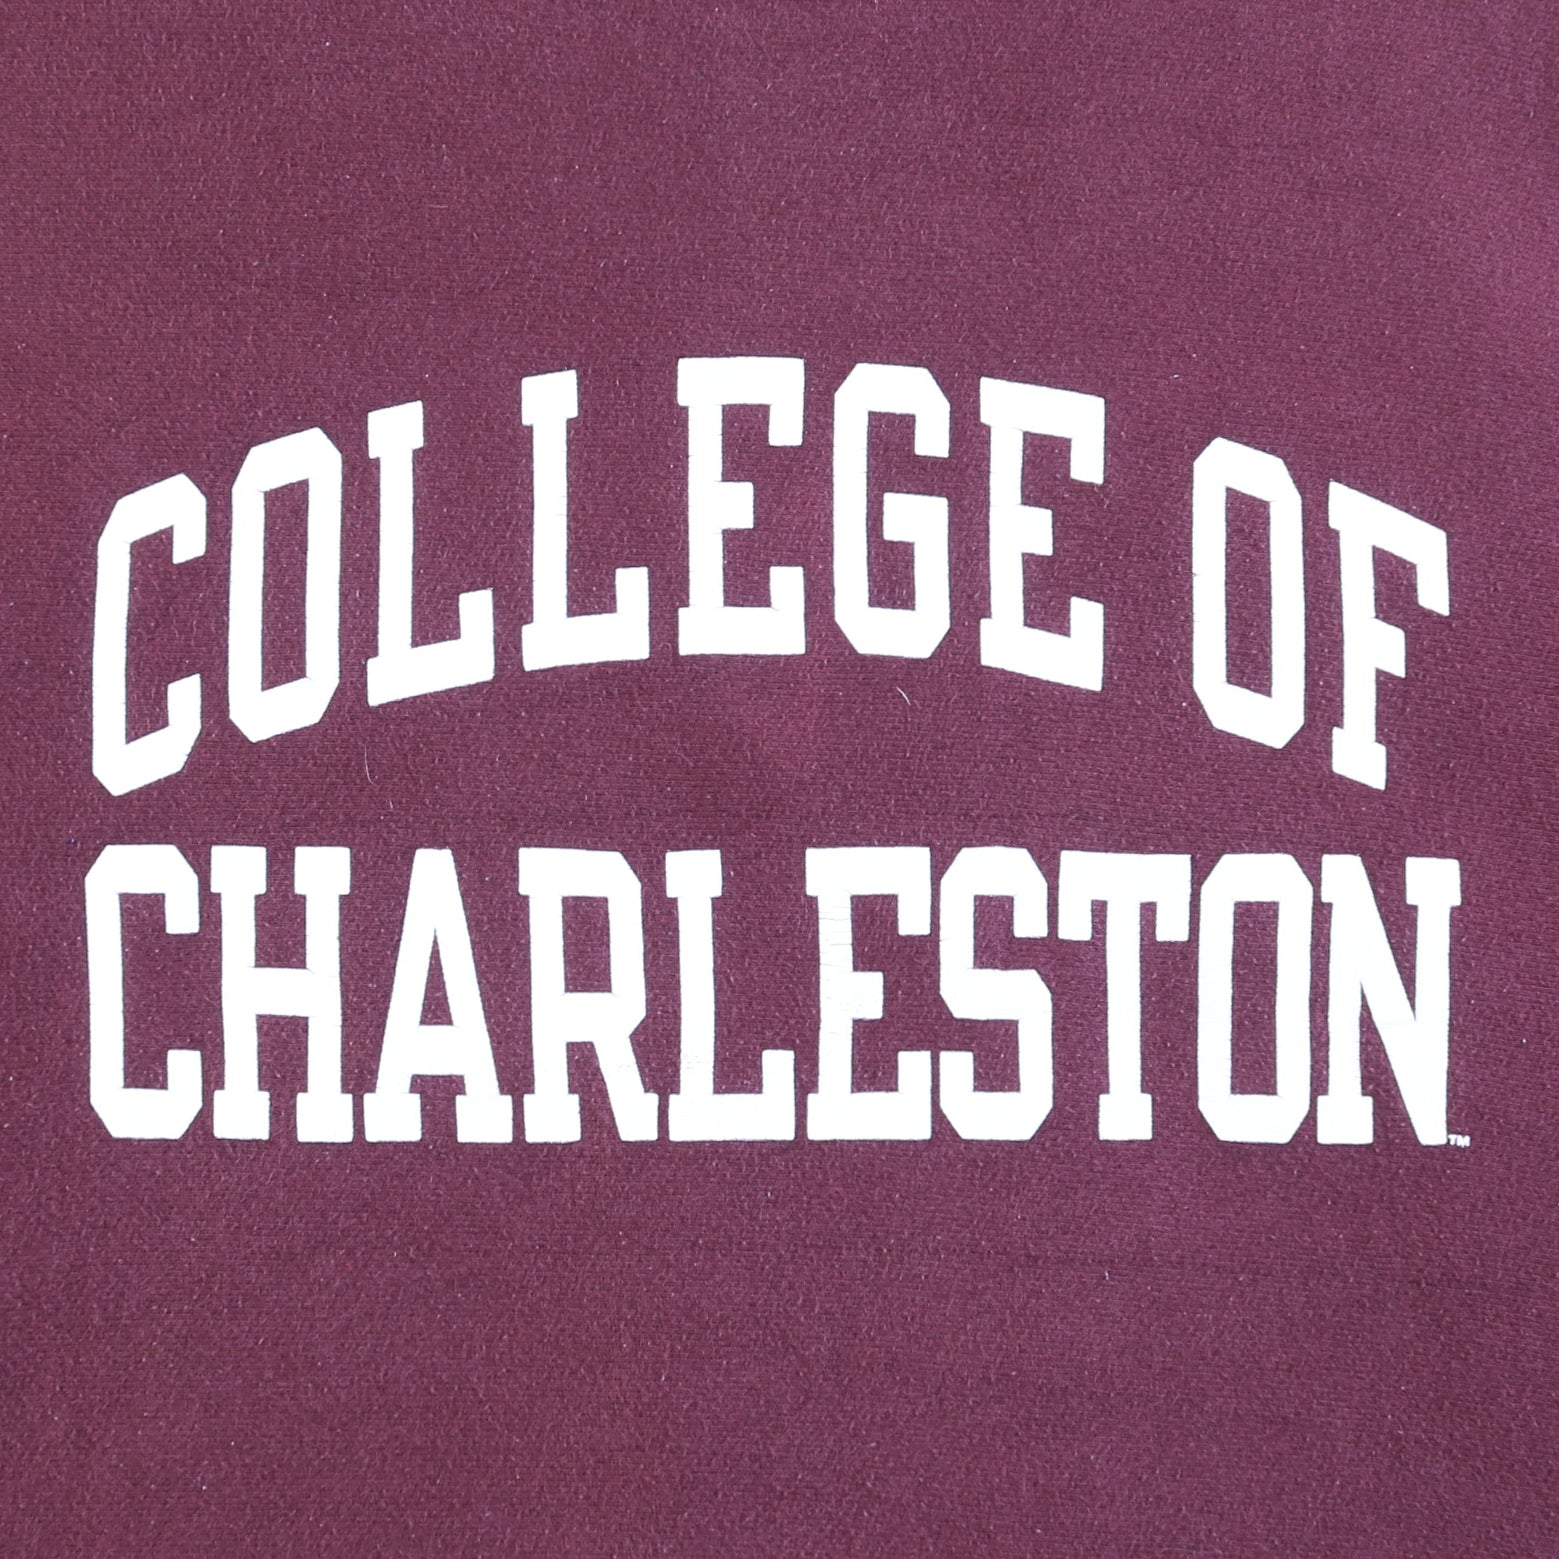 Vintage 'Charleston' Champion Sweatshirt - American Madness